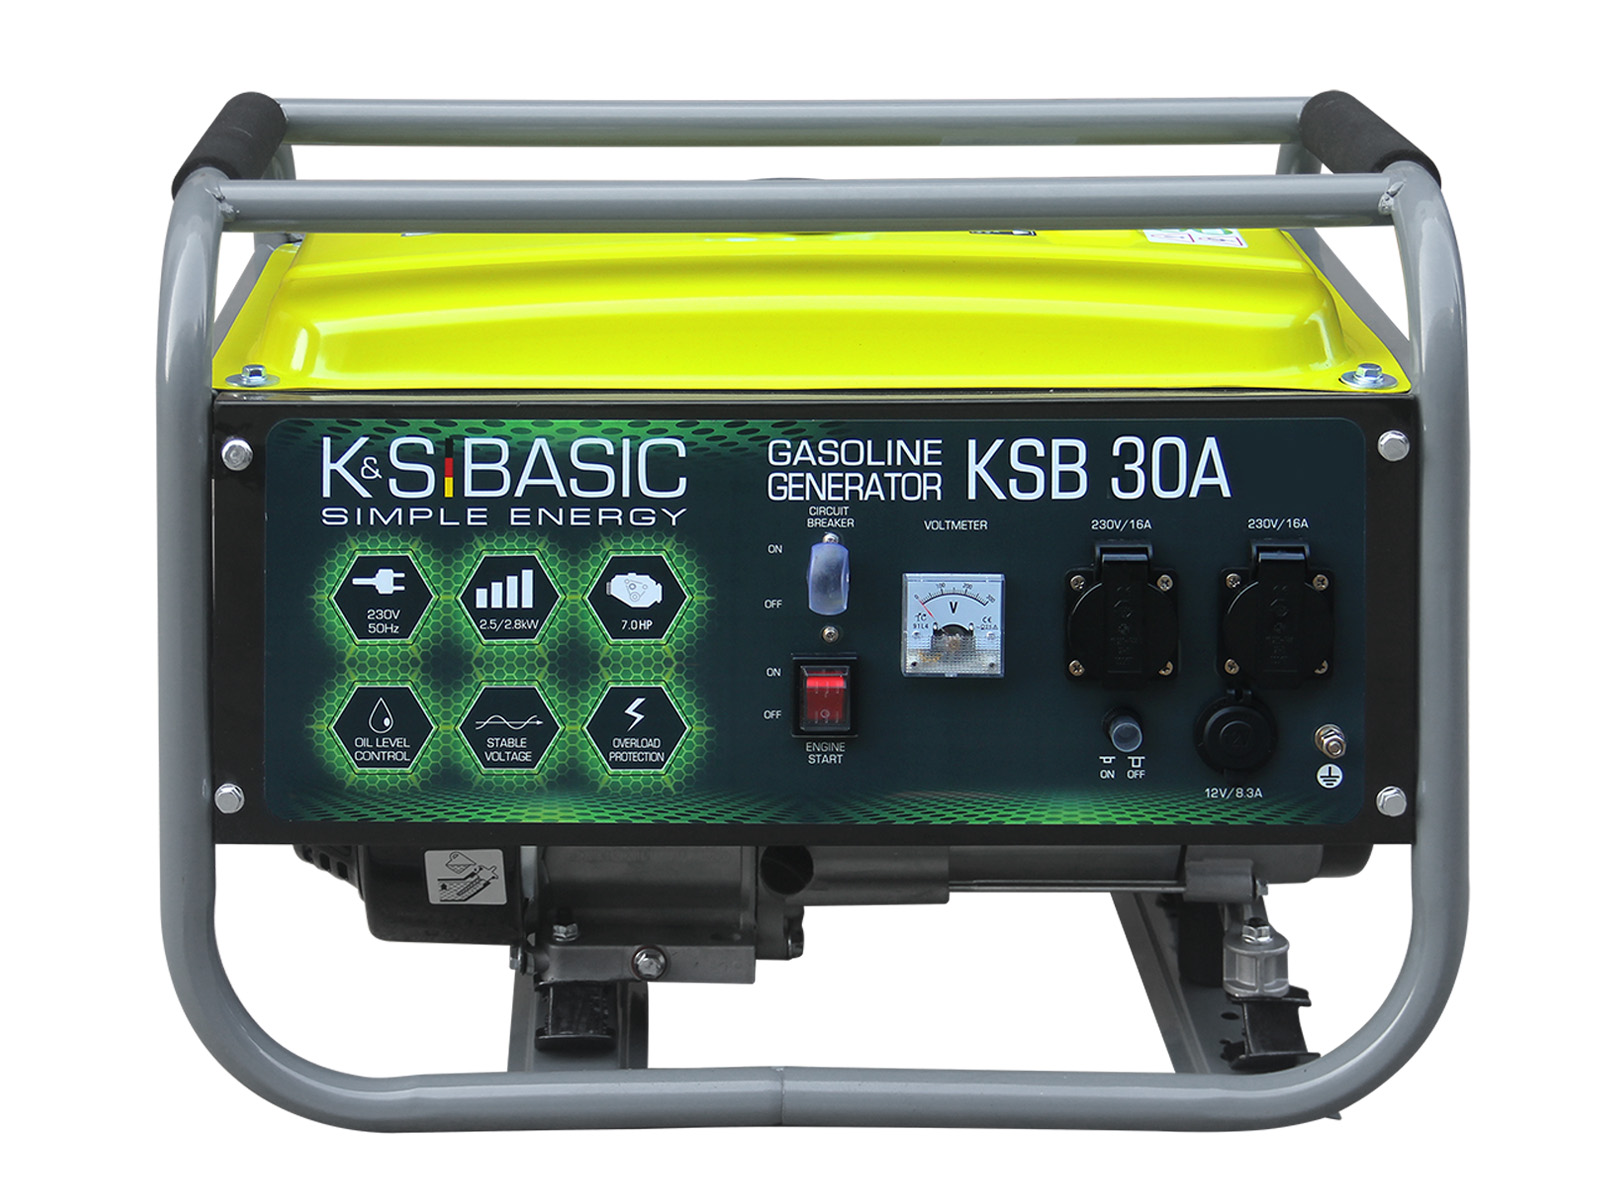 Gasoline generator "K&S BASIC" KSB 30A